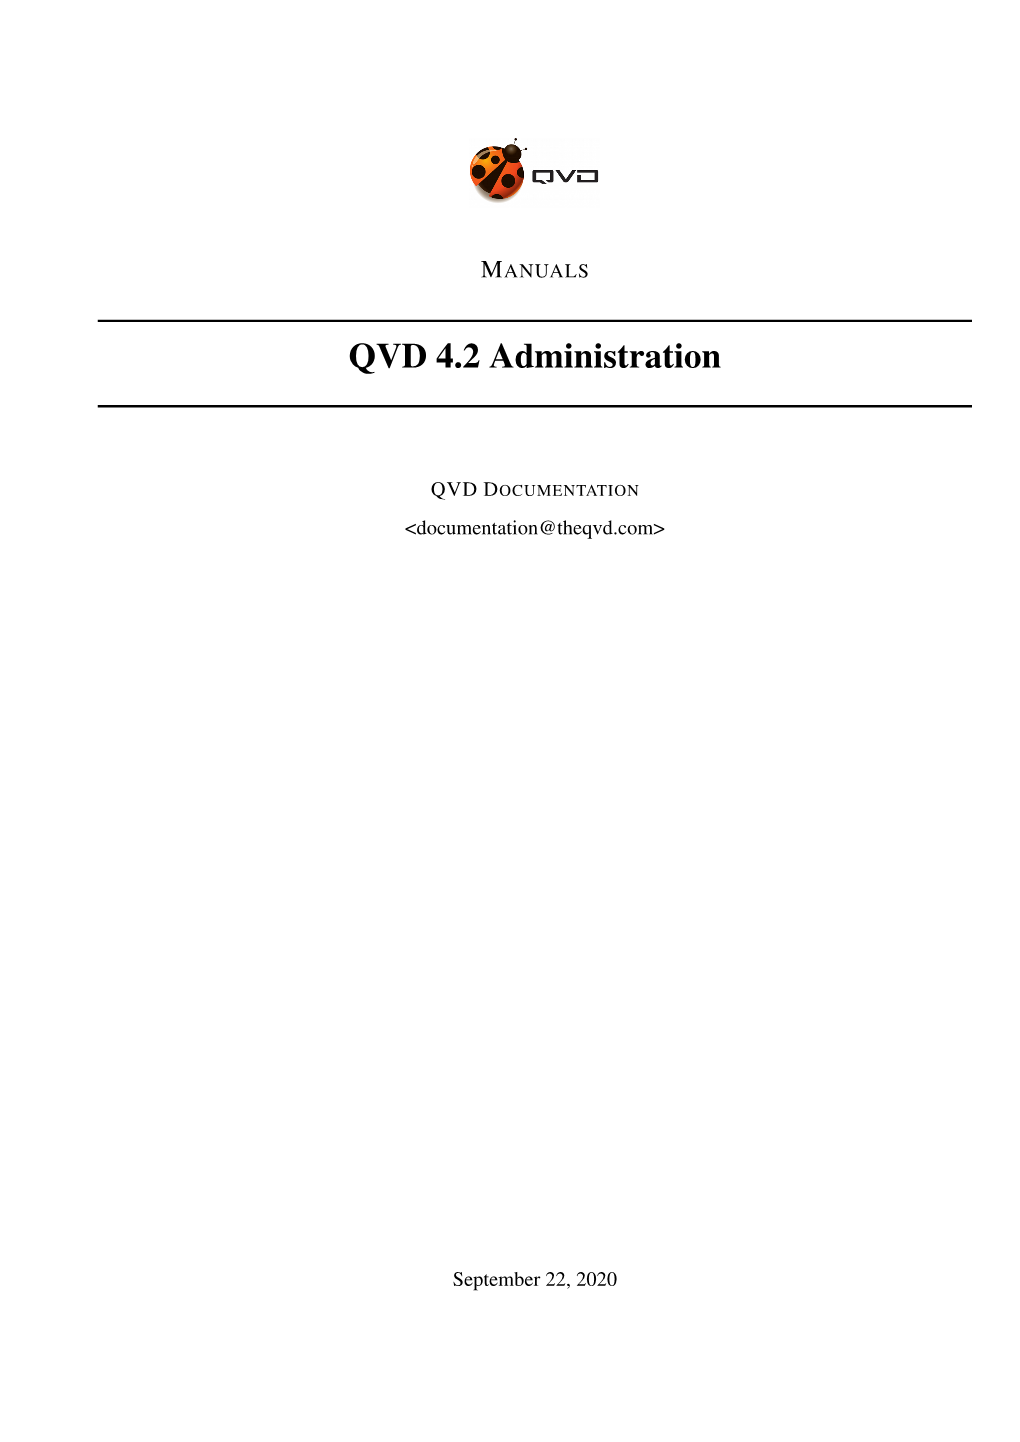 Administration Manual of QVD 4.2 I